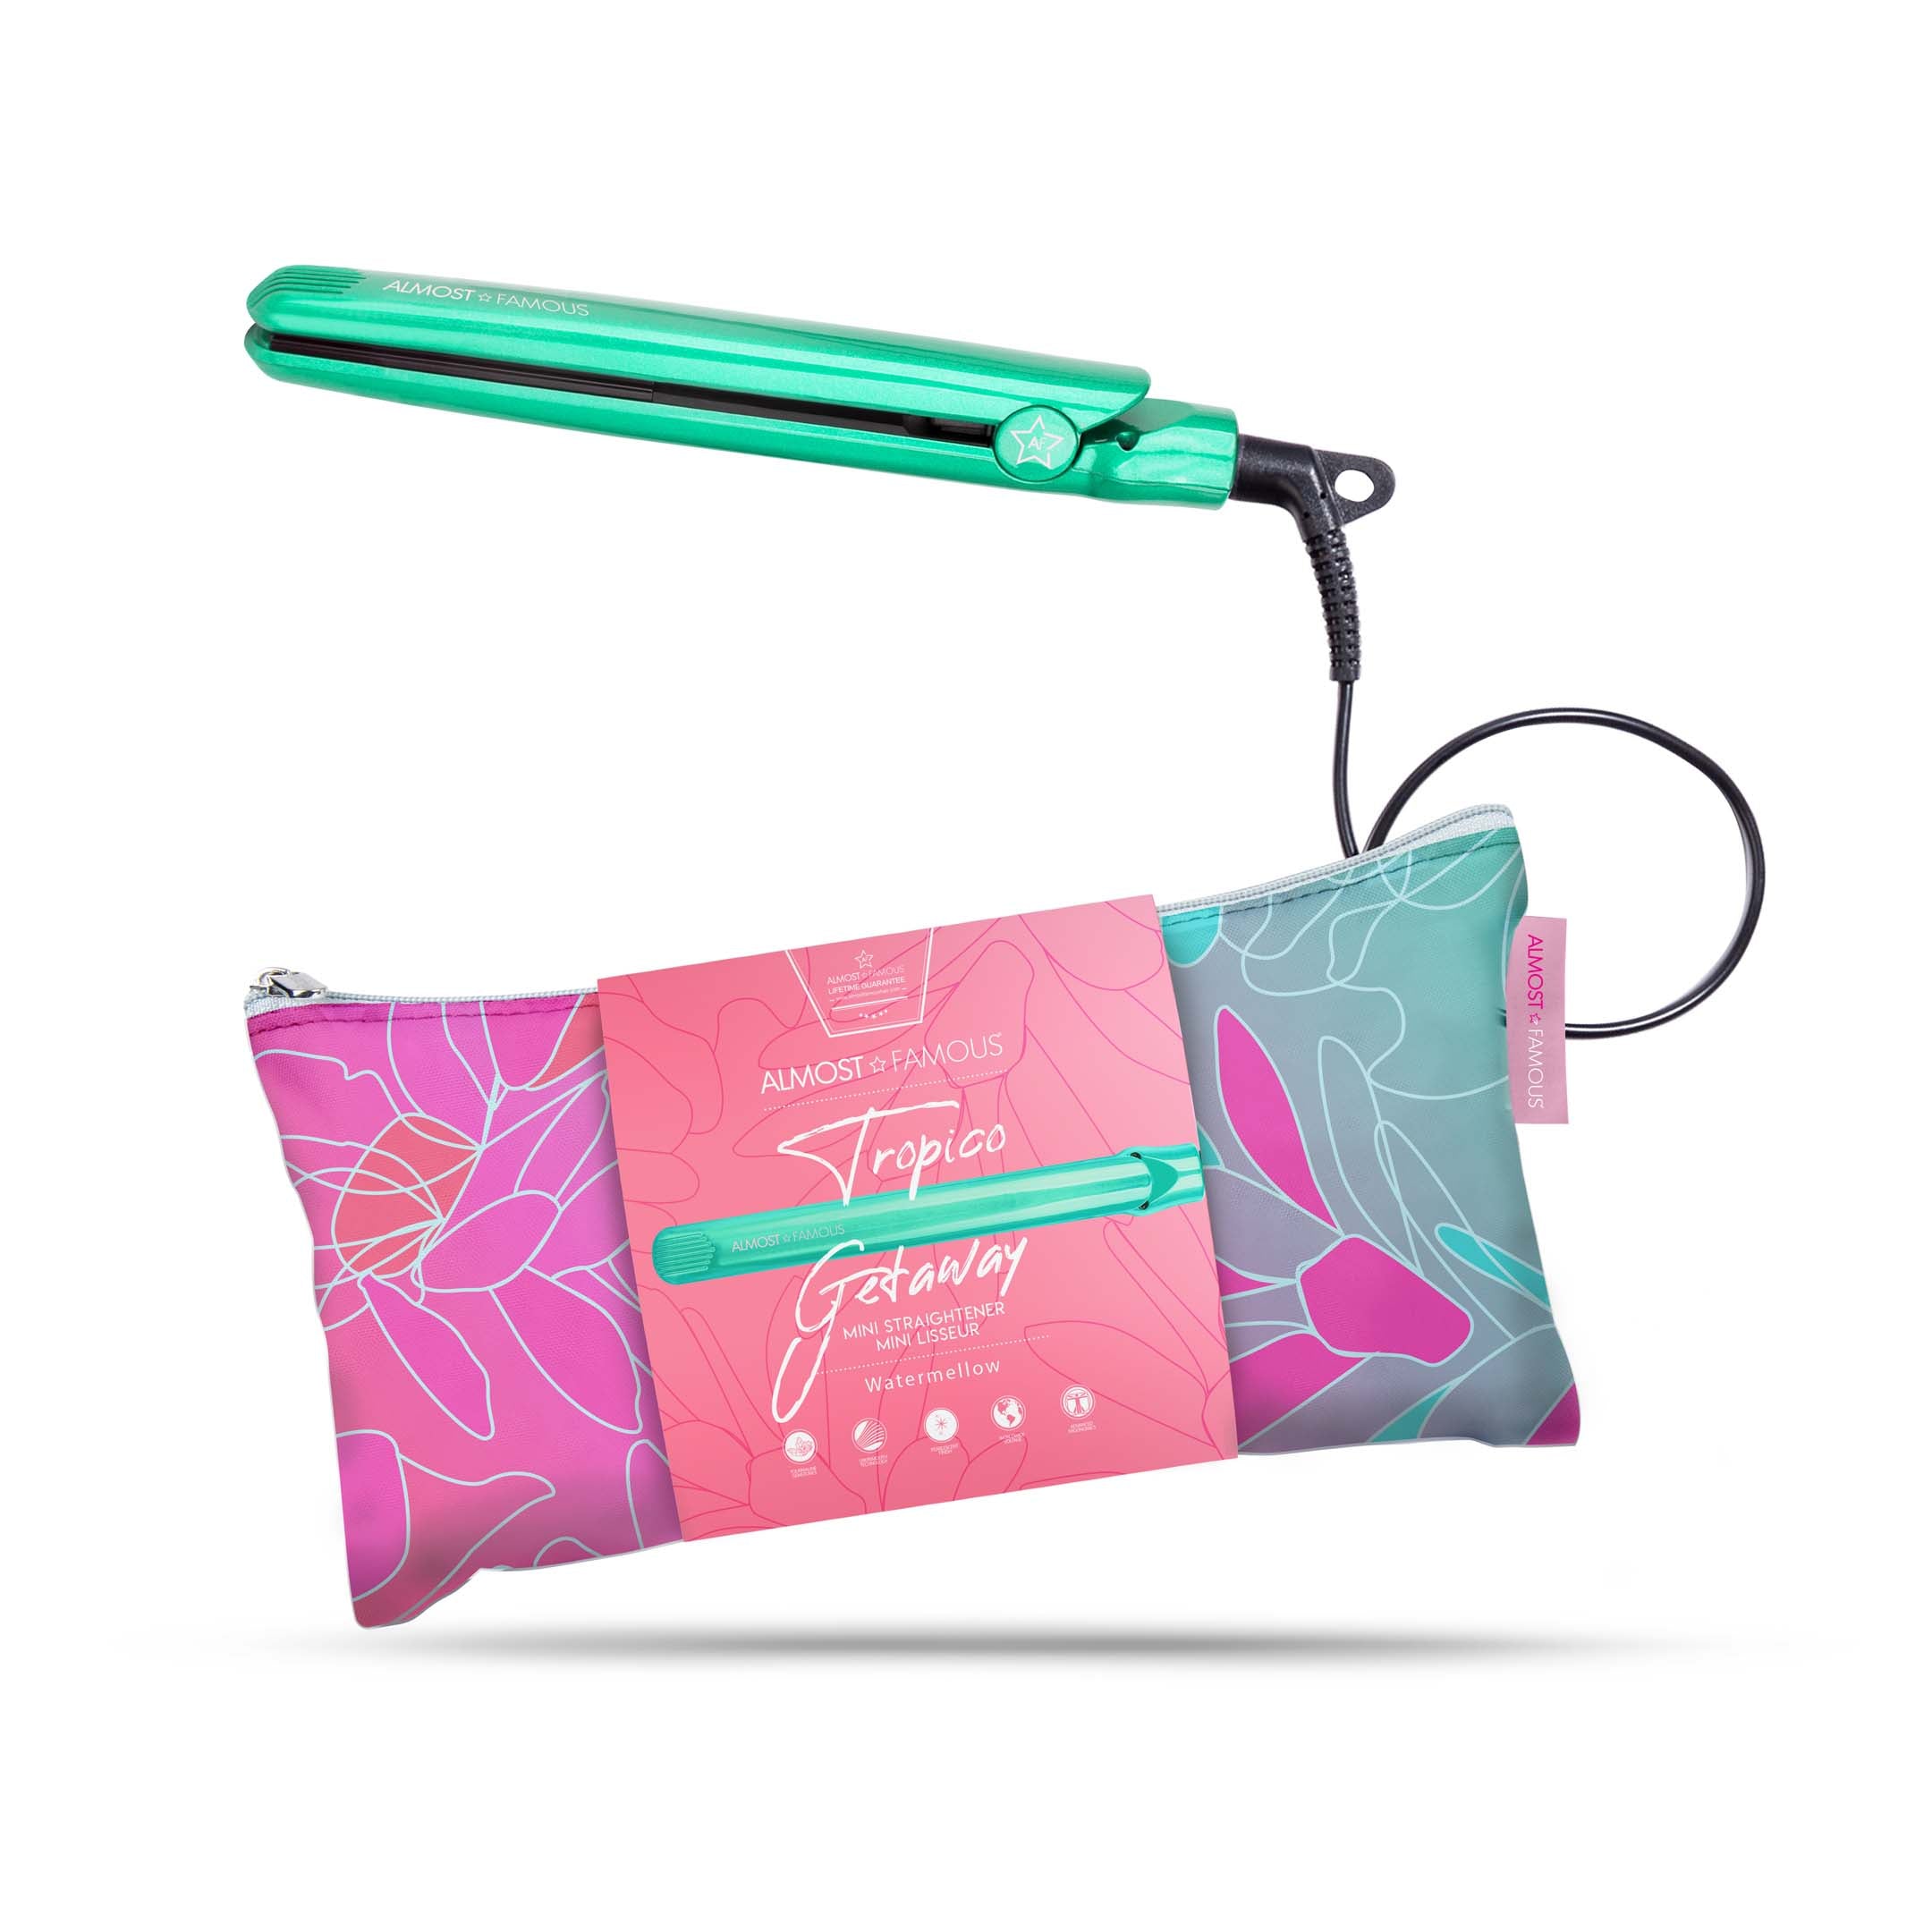 Tropico Getaway 0.5" Flat Iron with Travel Bag + "Spotlight" LED Selfie Light